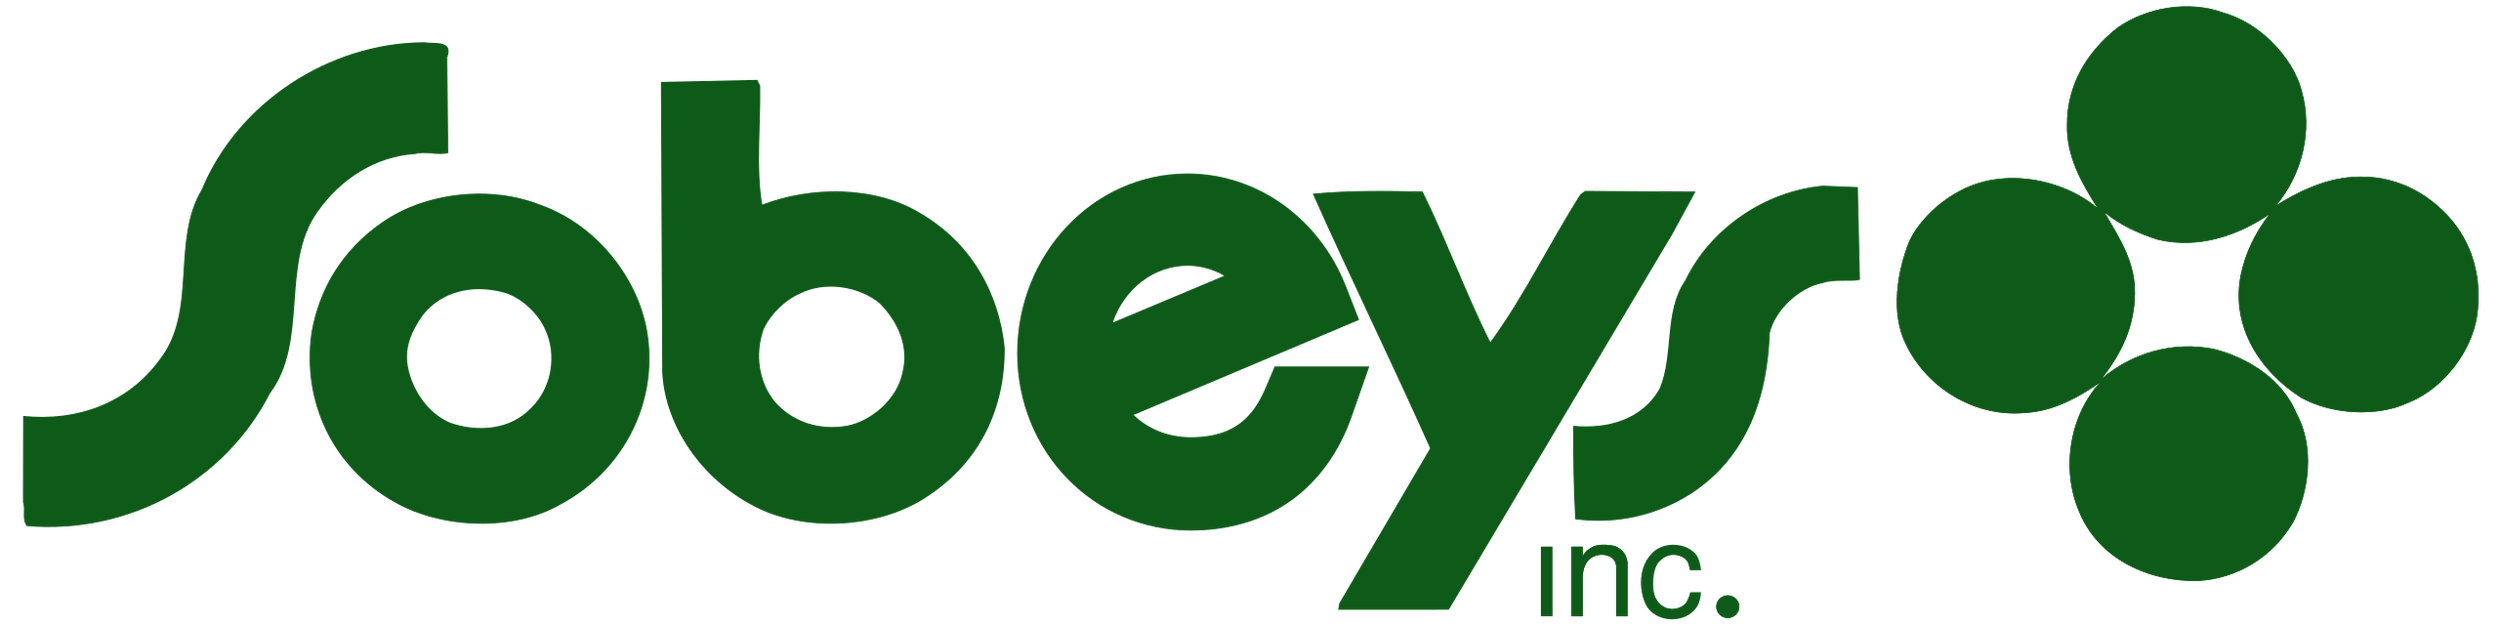 2560px-Sobeys_logo.svg.png